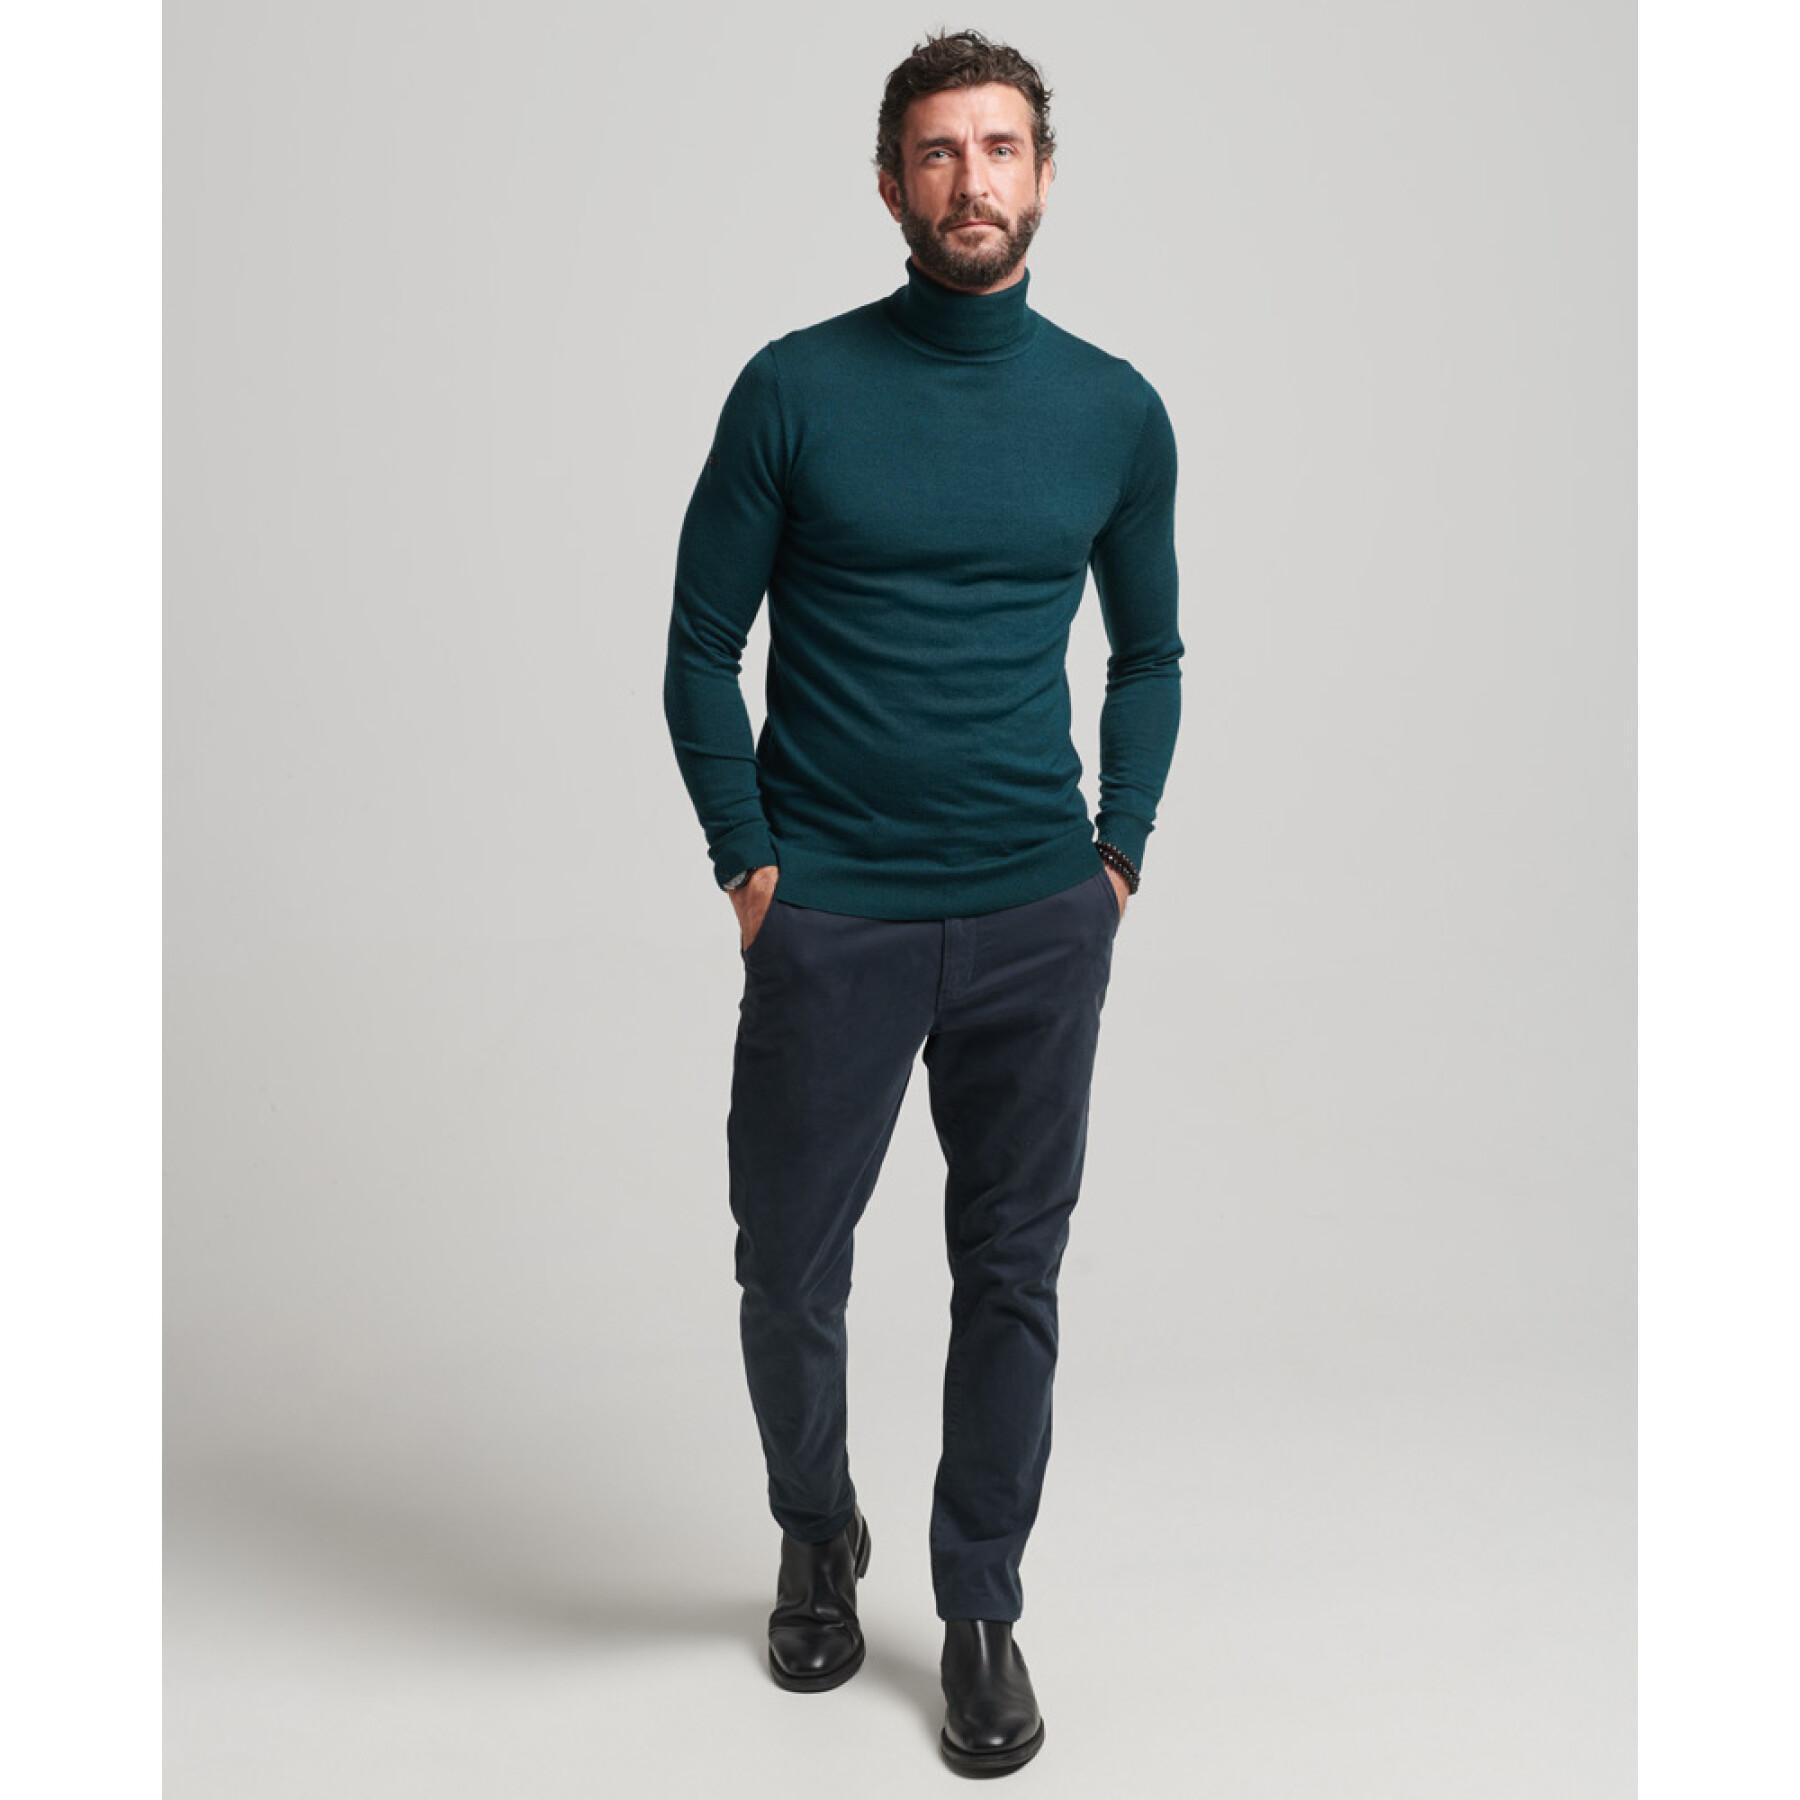 Merino turtleneck sweater Superdry - Lifestyle - Sweats - Men